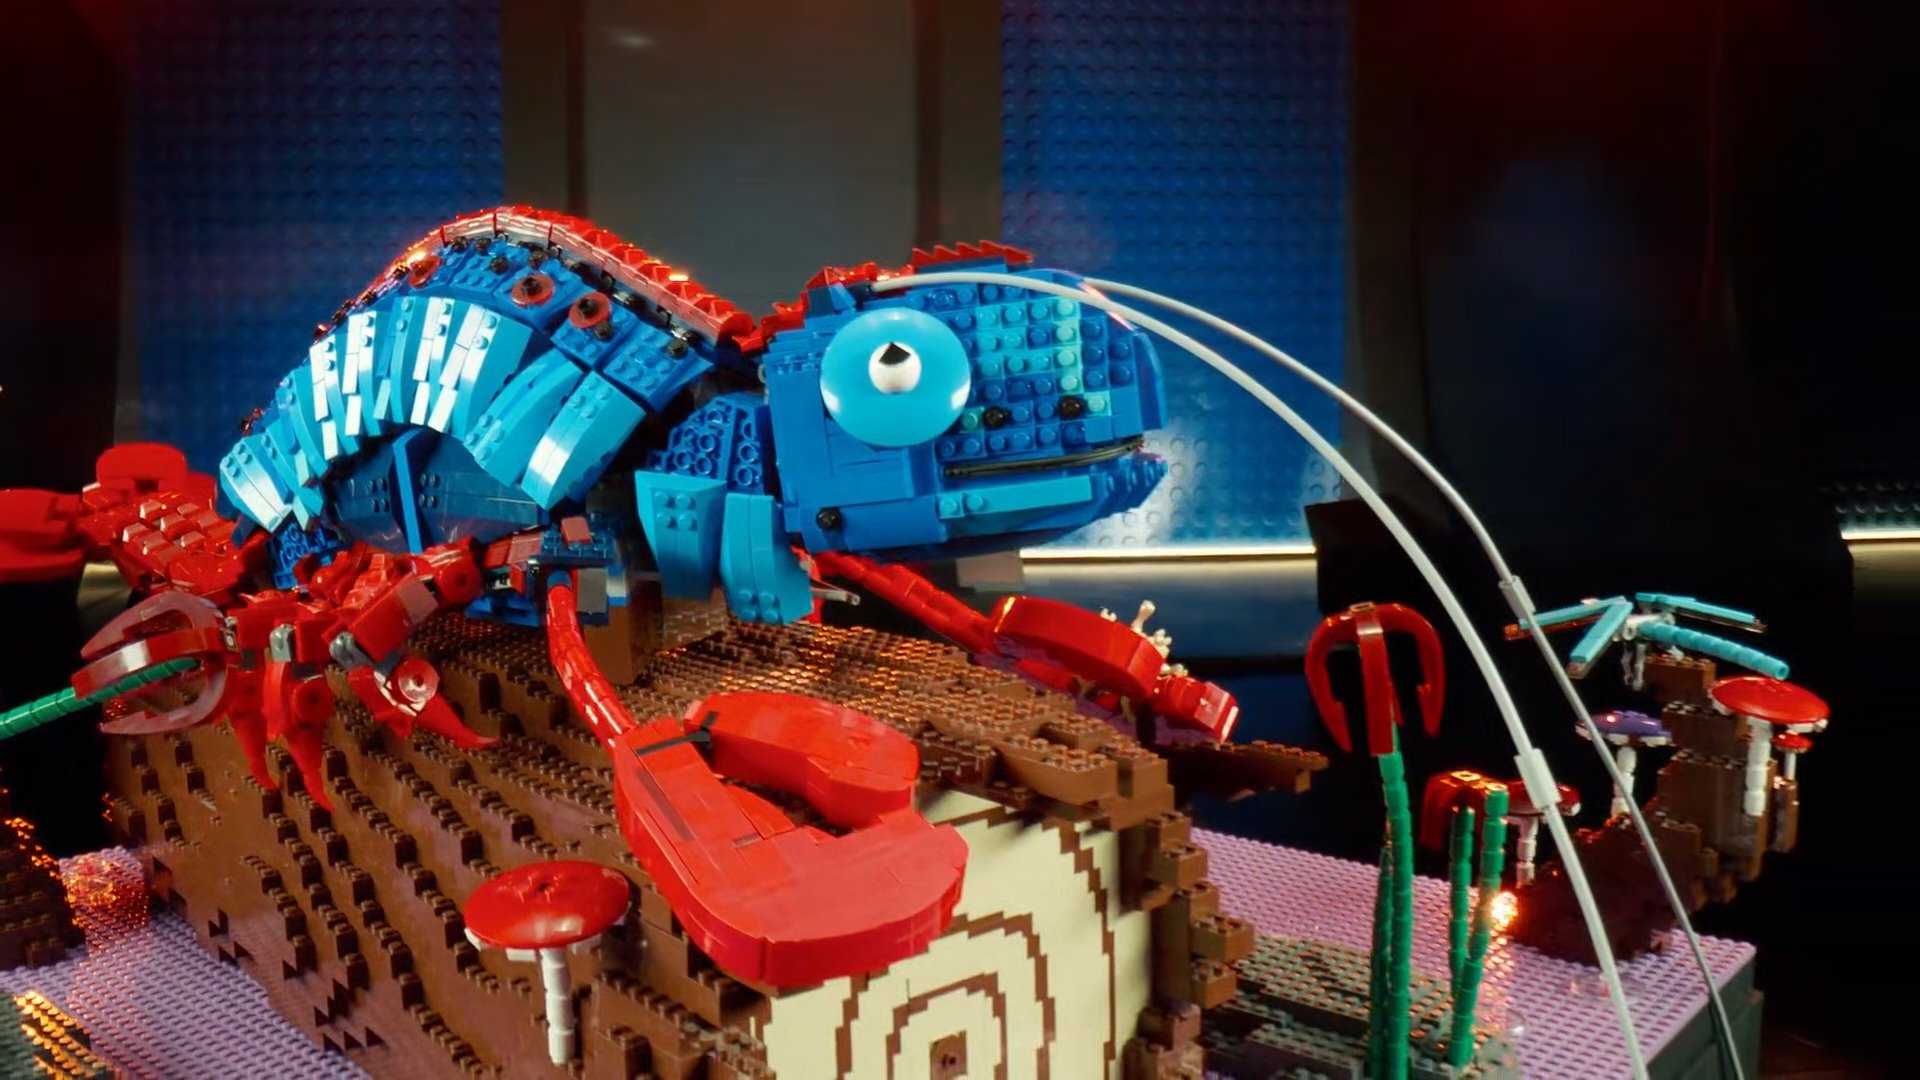 LEGO Masters U.S Season 2     – Land and Sea Challenge – Caleb and Jacob - Chameleon + Lobster